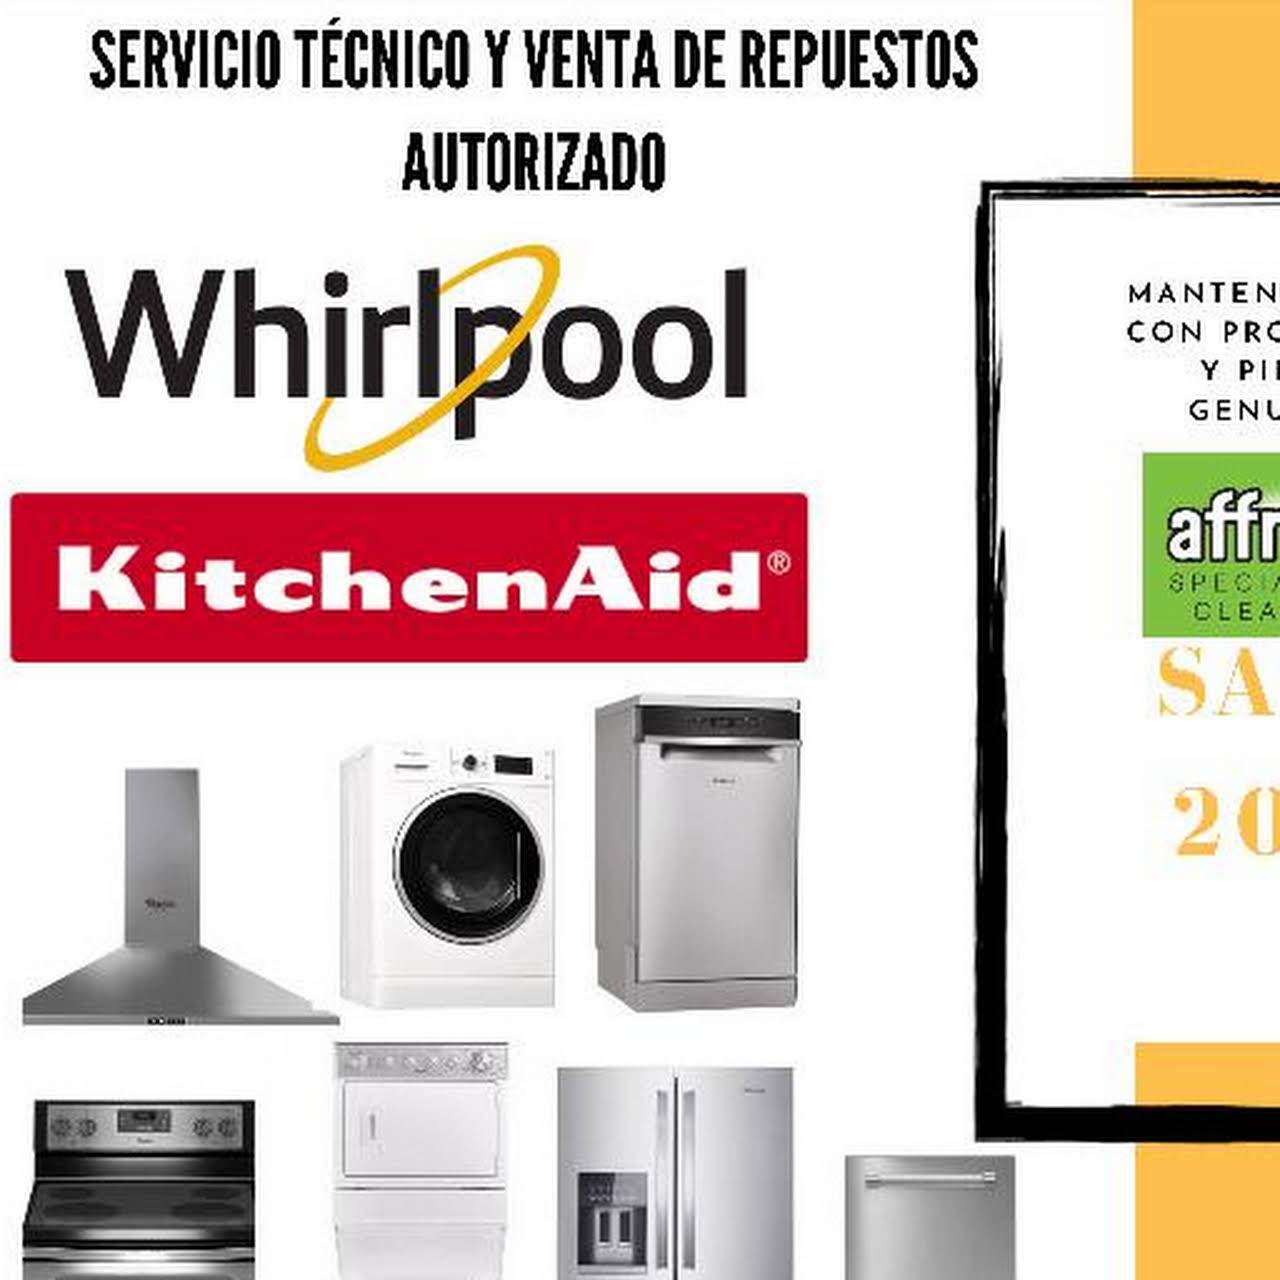 favorito Decremento Quizás mdi services - Distribuidor autorizado whirlpool kitchenaid Panama